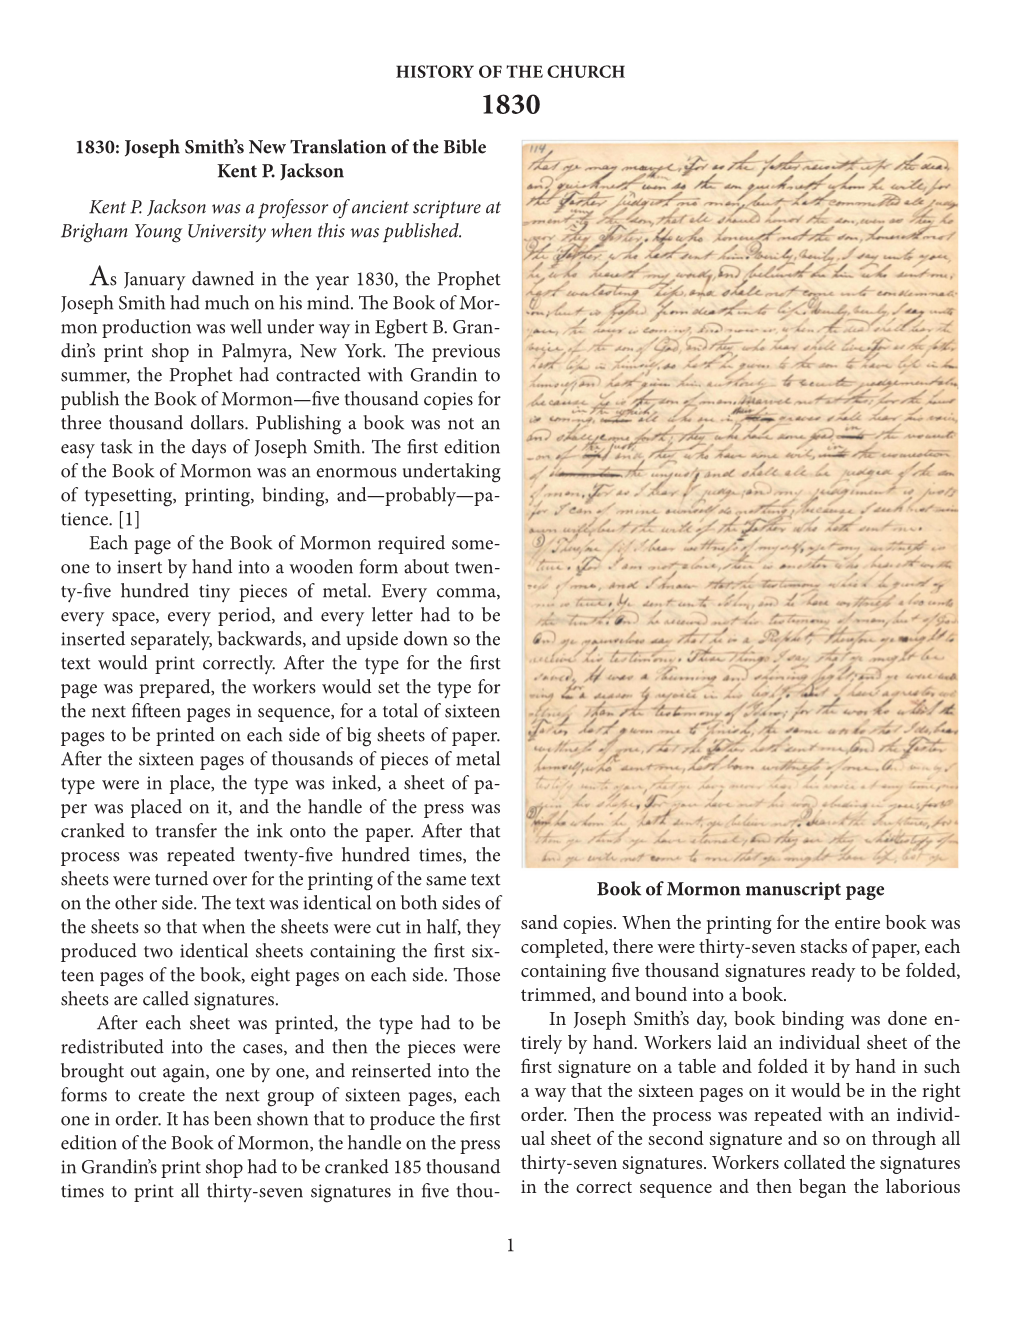 1 1830: Joseph Smith's New Translation of the Bible Kent P